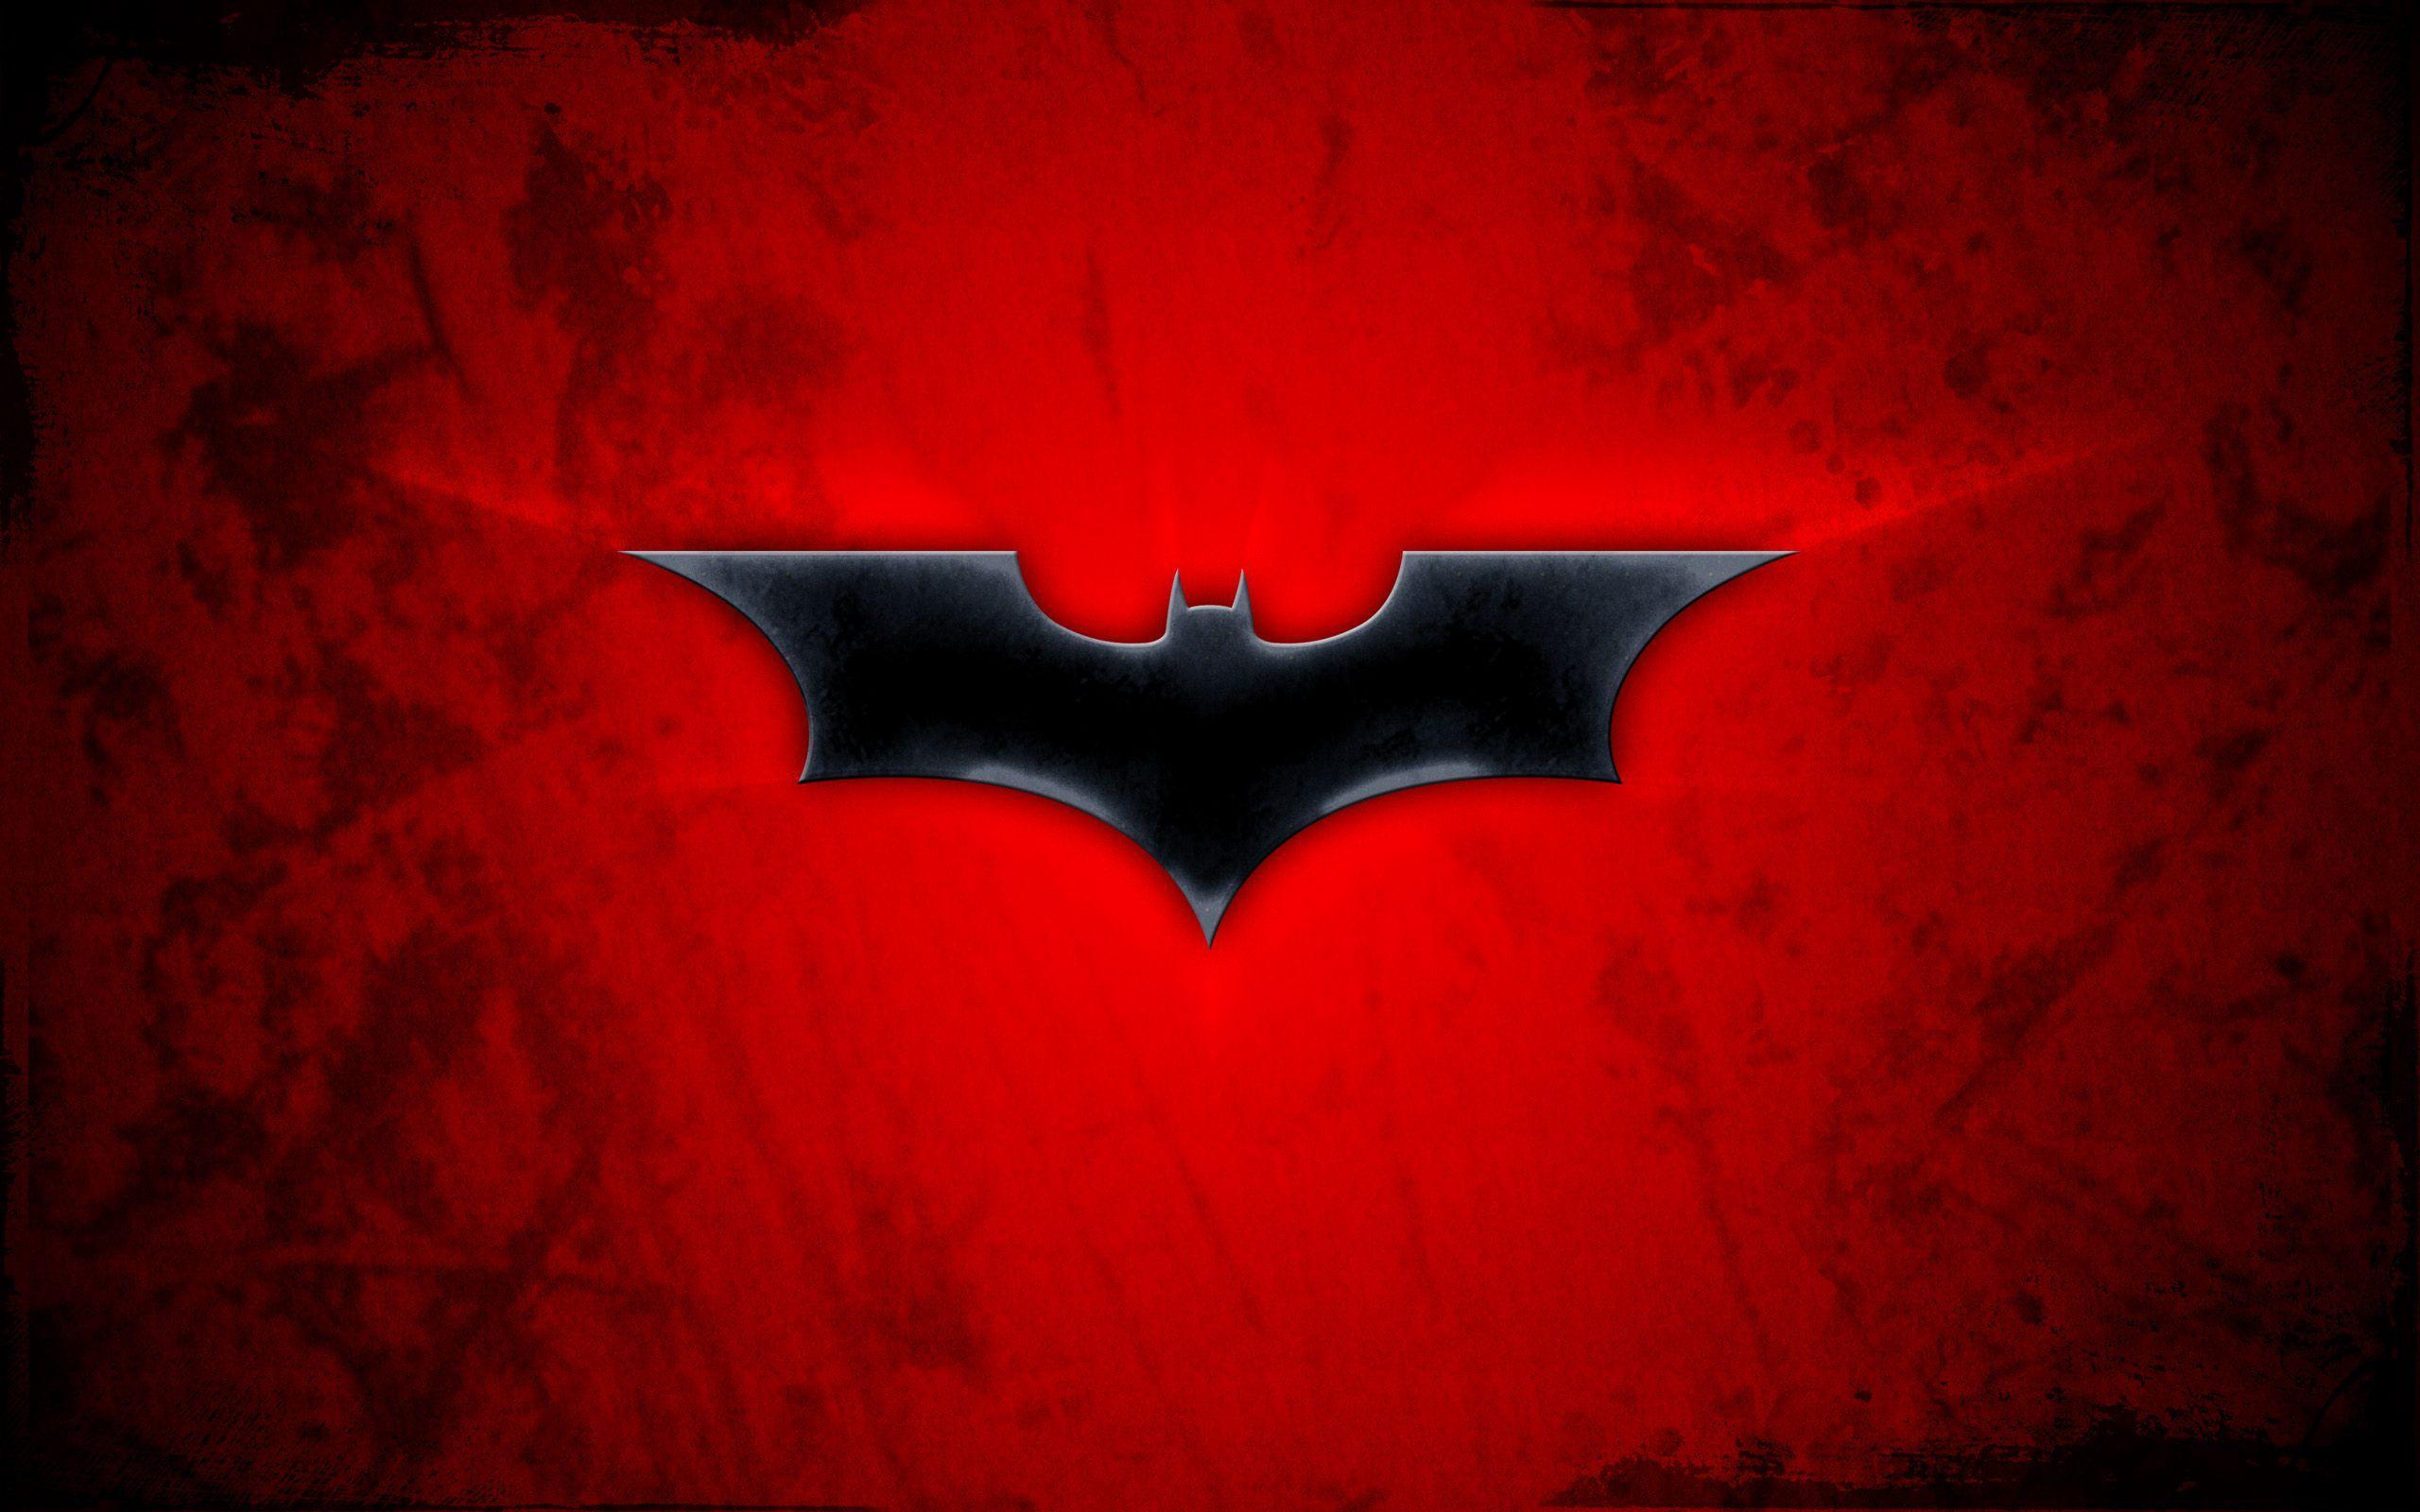 Batman Logo Red T Shirt Iron on Transfer Decal #16